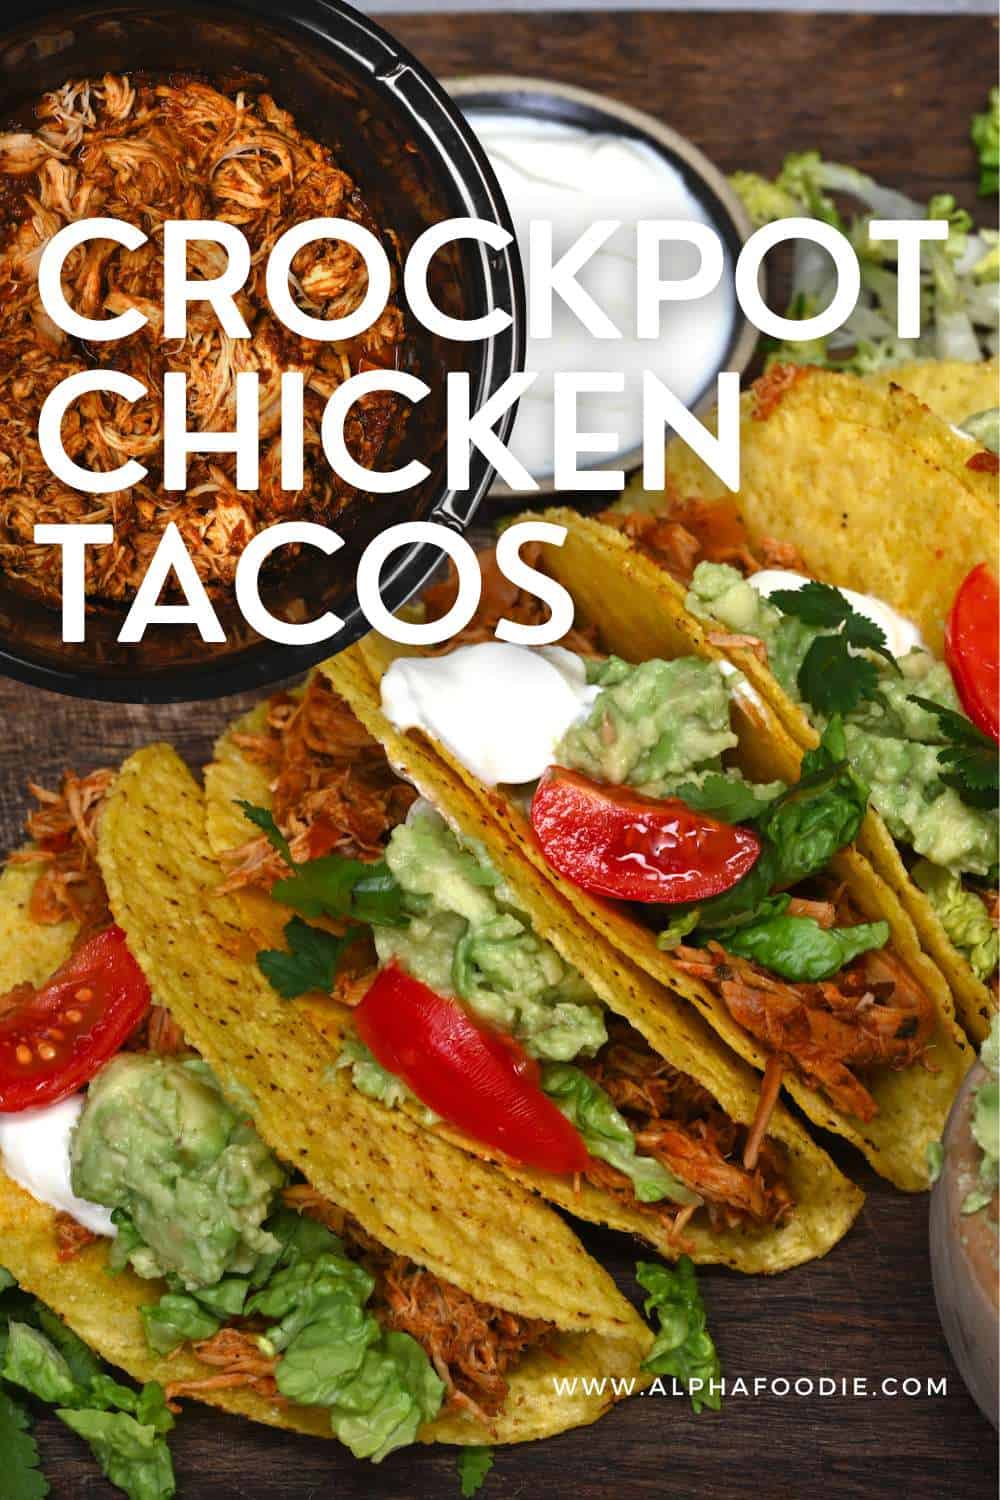 Crockpot Shredded Chicken Tacos - Alphafoodie